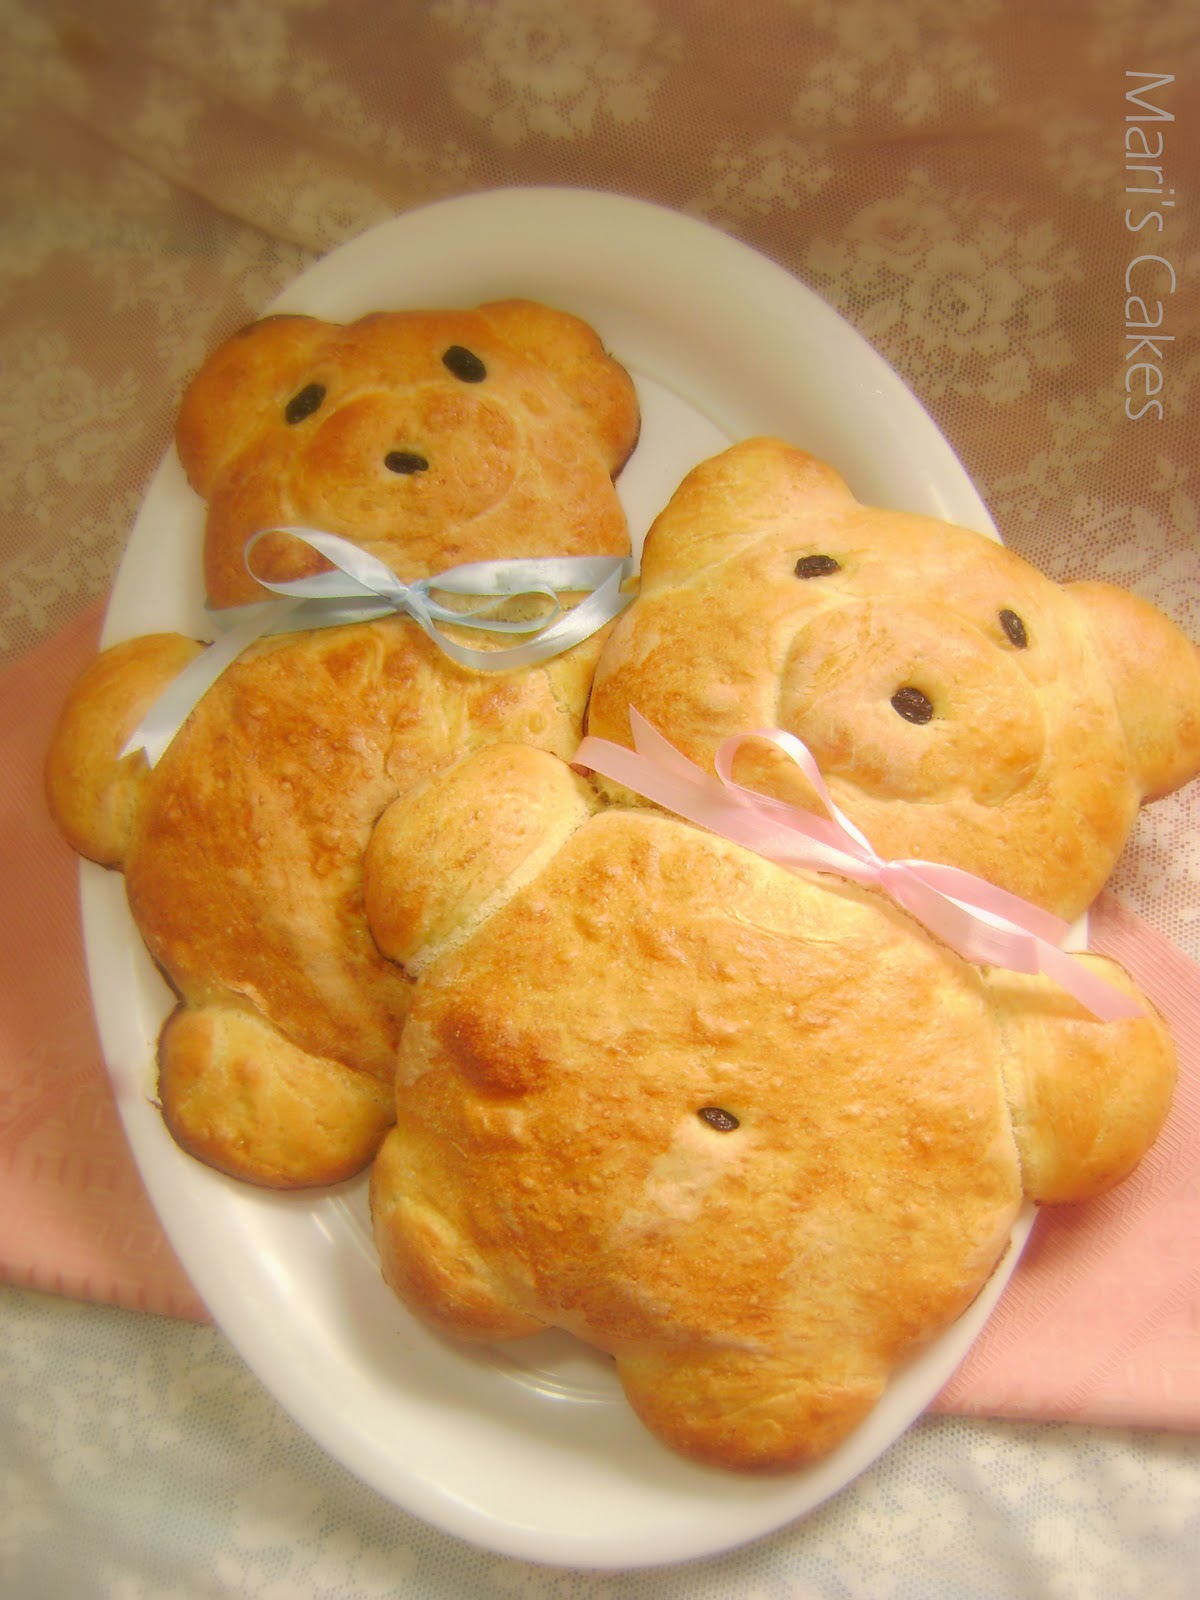 https://3.bp.blogspot.com/-lPS-gXjGM_w/TyYTp5O2YqI/AAAAAAAAIQg/iP6JTsKCIzc/s1600/Mari%2527s+Cakes+Bread%252C+Teddy+Bear+Bread.JPG